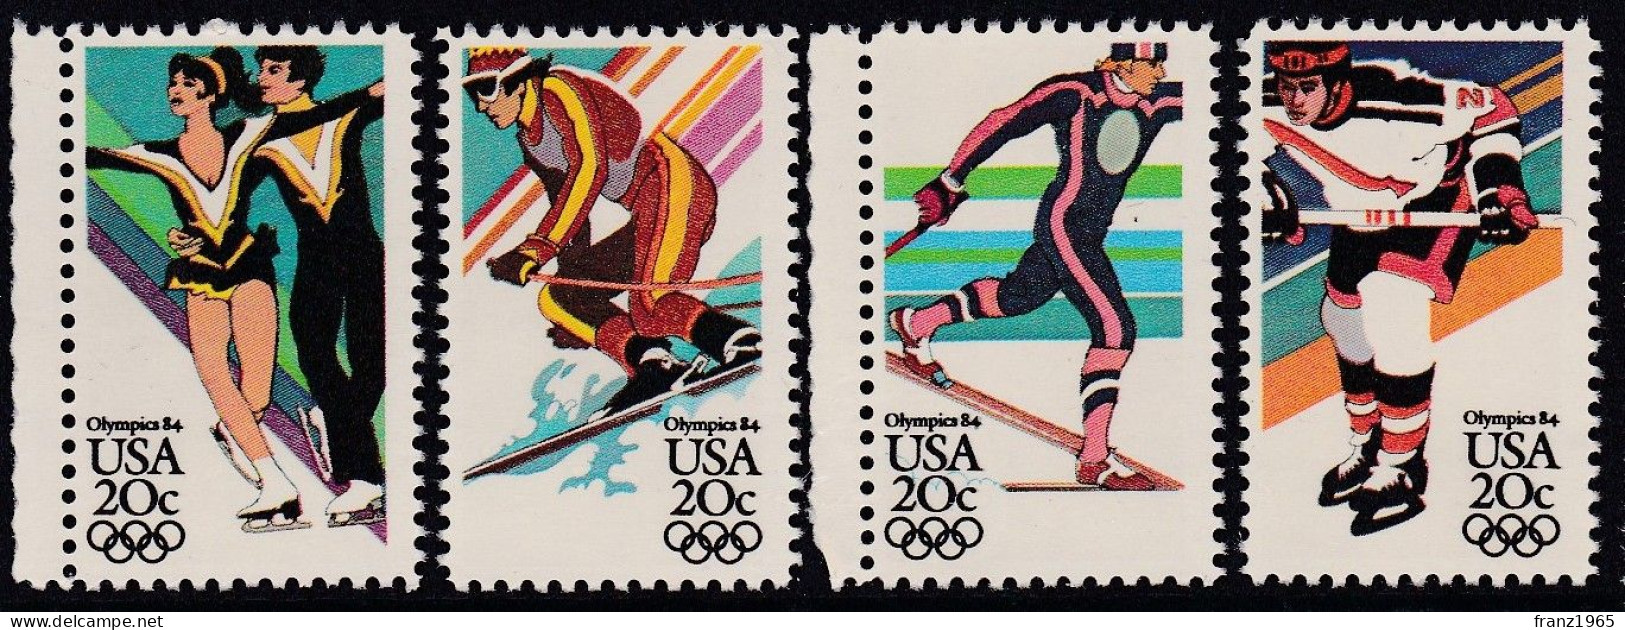 USA - Olympic Winter Games - 1984 - Invierno 1984: Sarajevo